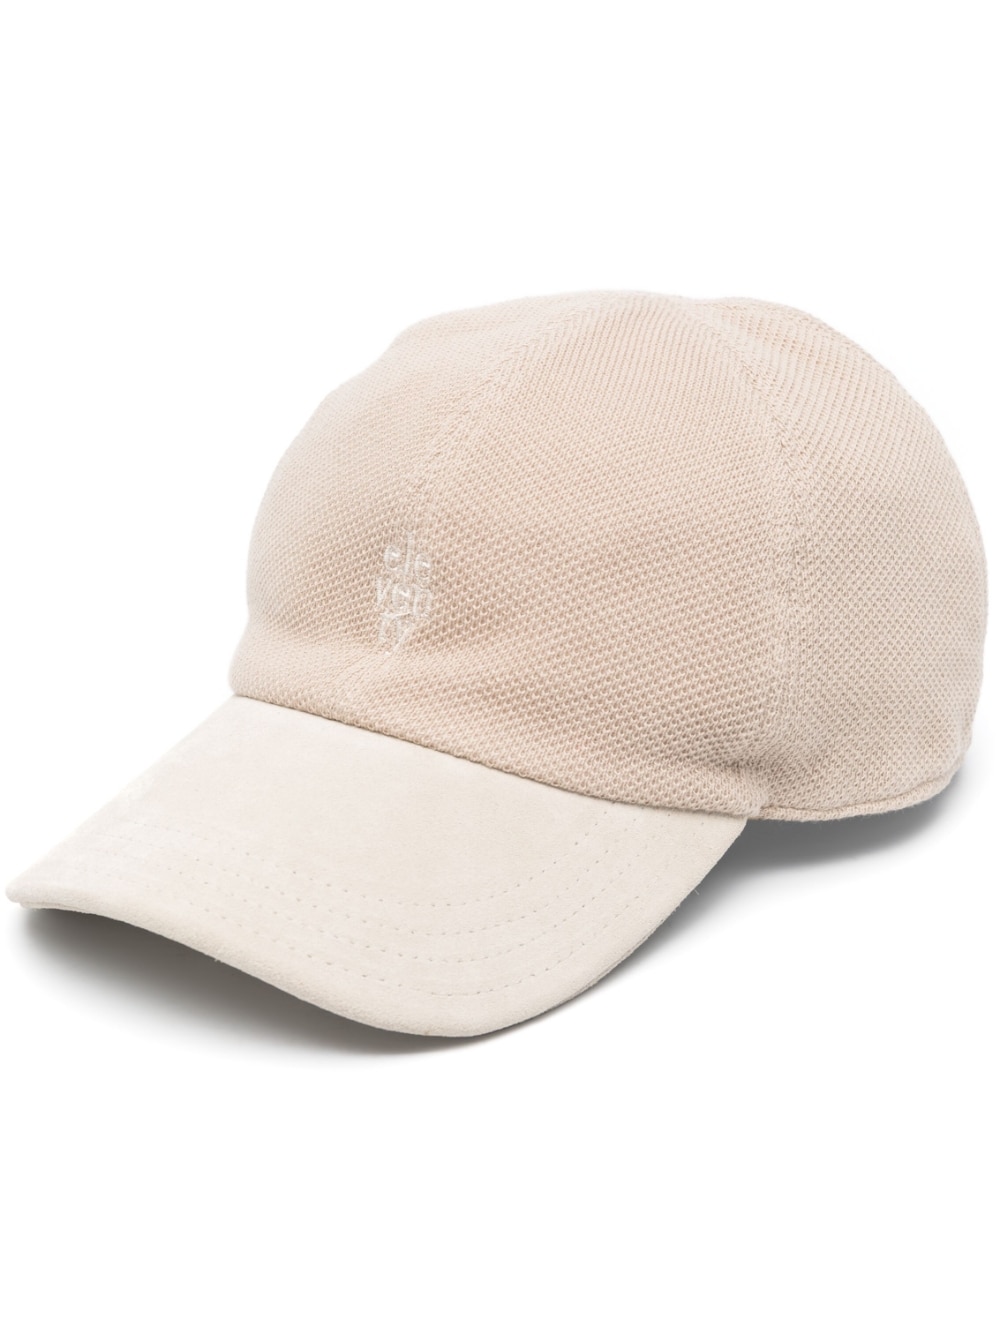 Eleventy - embroidered-logo cotton baseball cap - men - Cotton - L - Neutrals